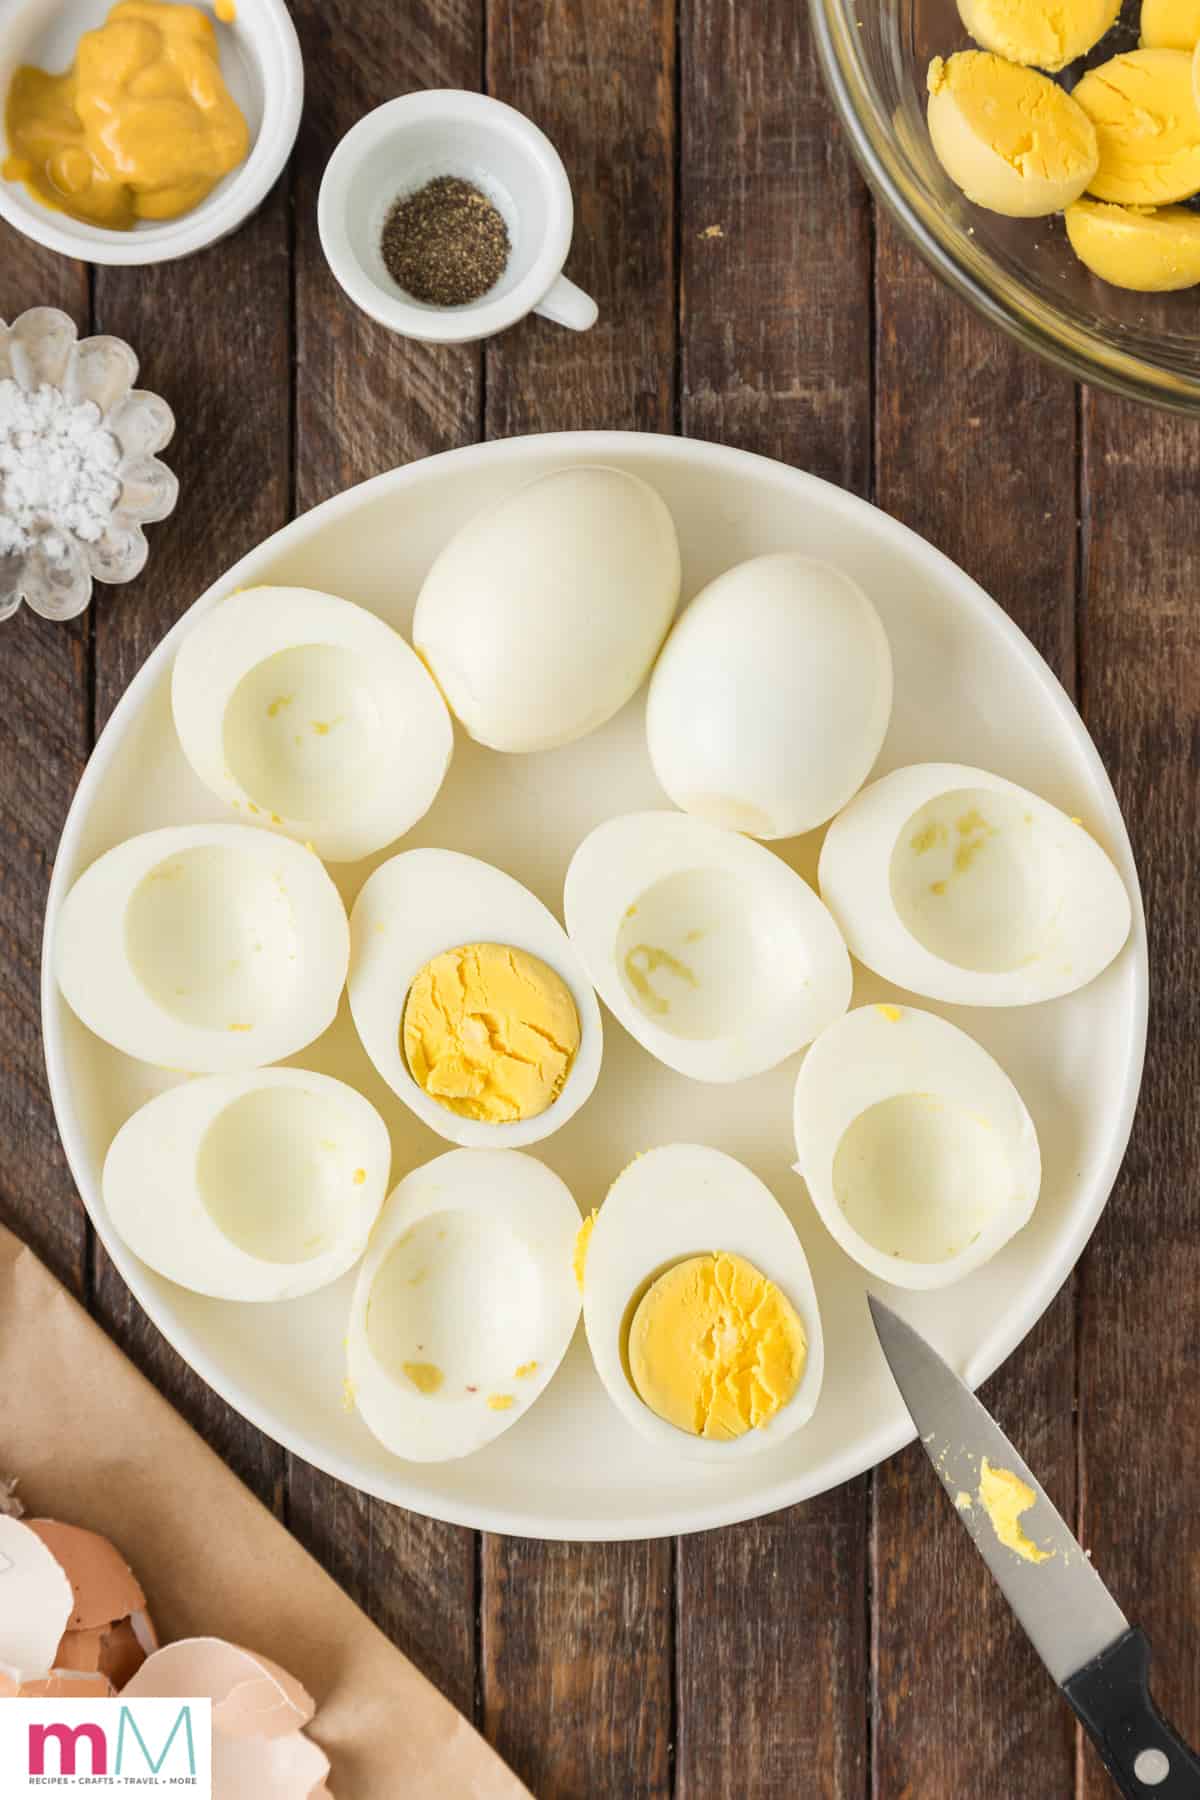 hardboiled eggs cut in half